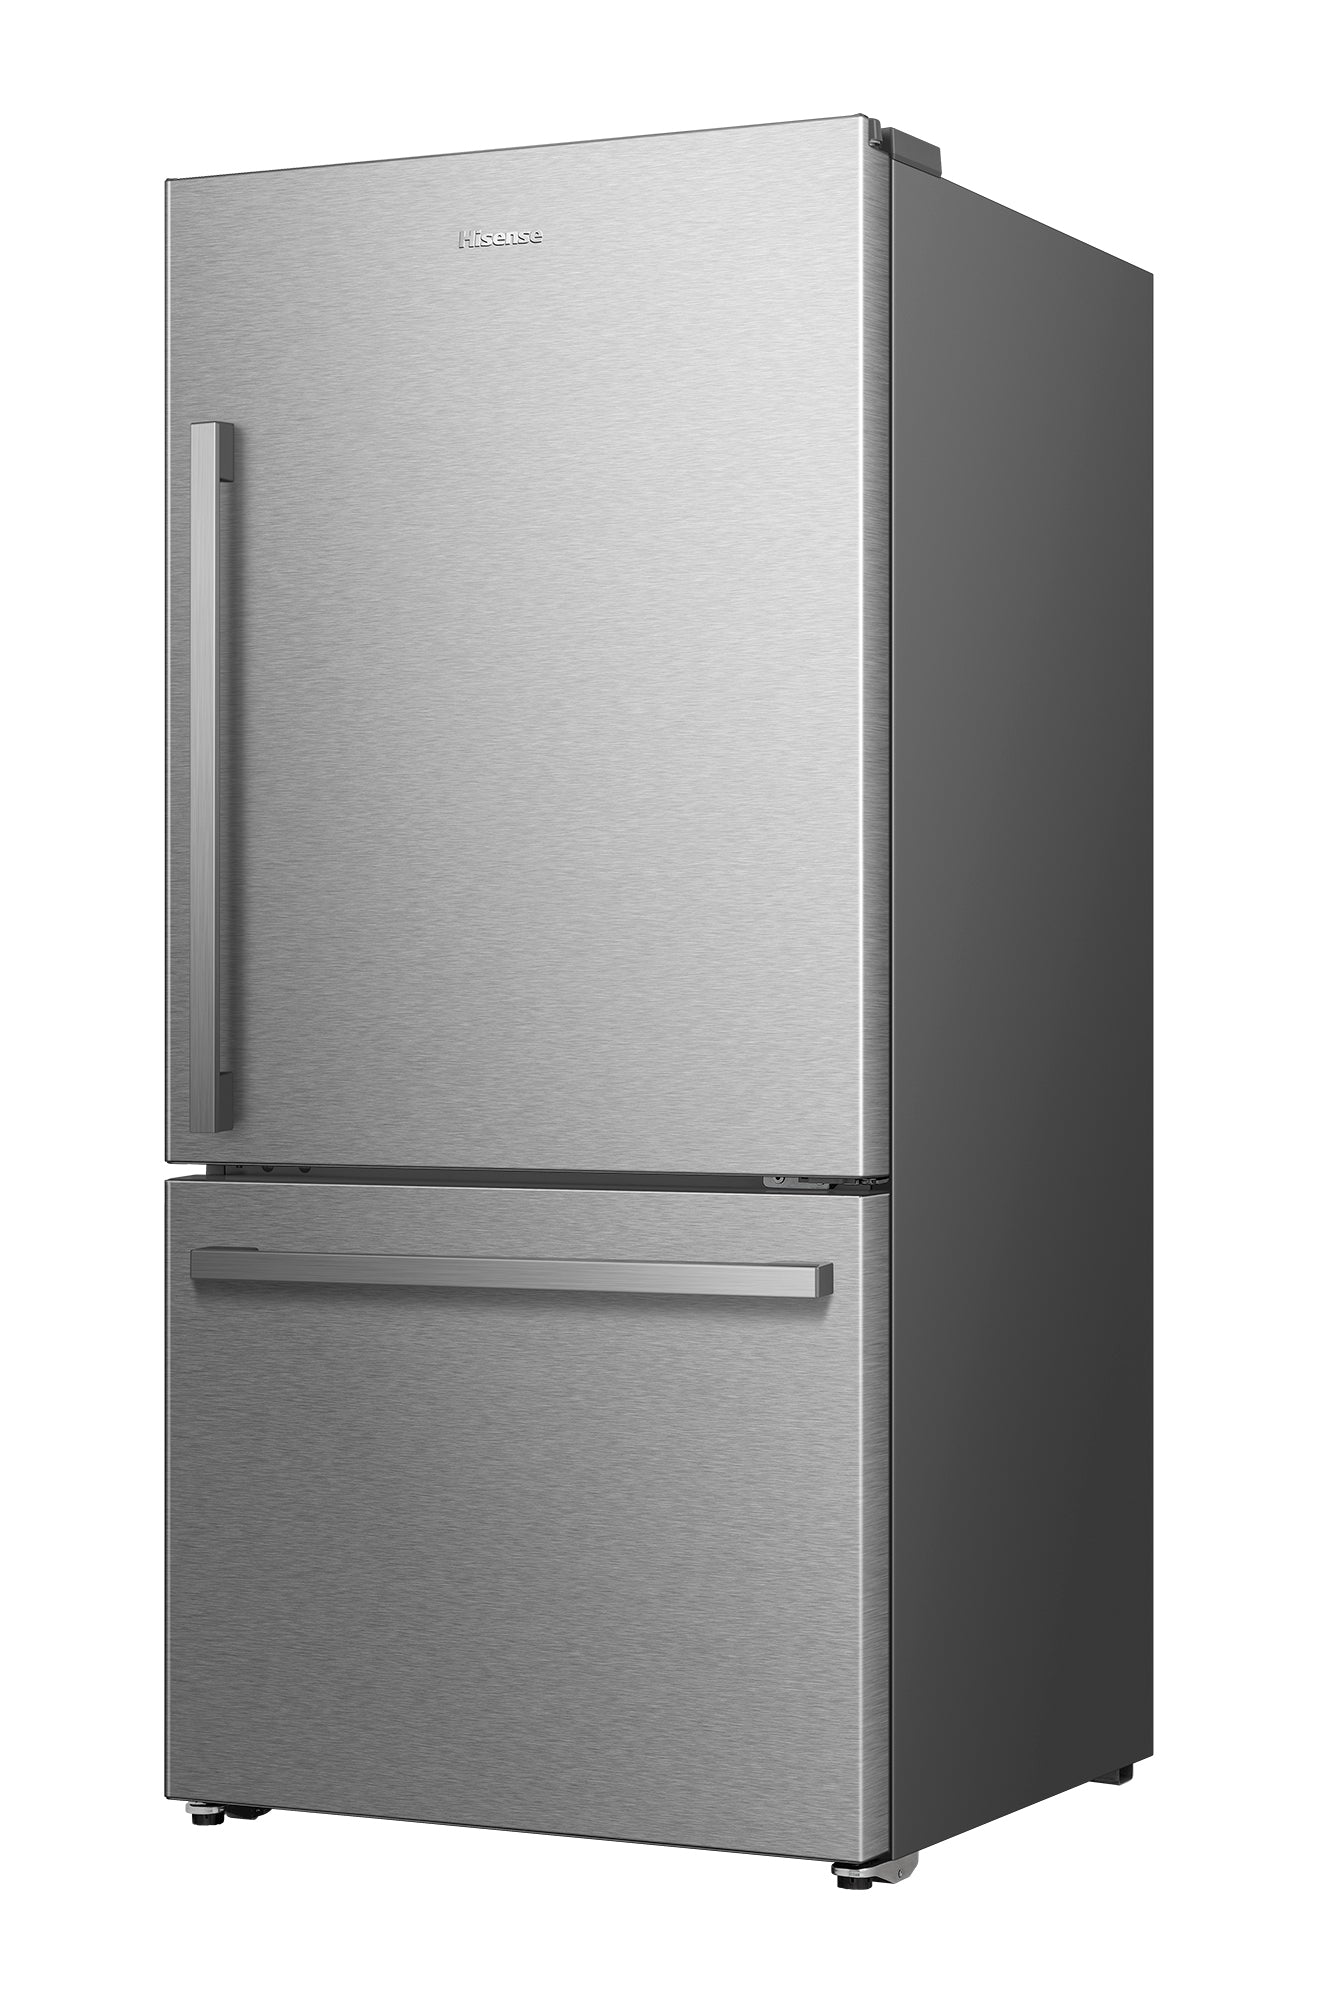 Hisense Stainless Steel Bottom Mount Refrigerator (22.3 Cu. Ft.) - RB22A2FSE